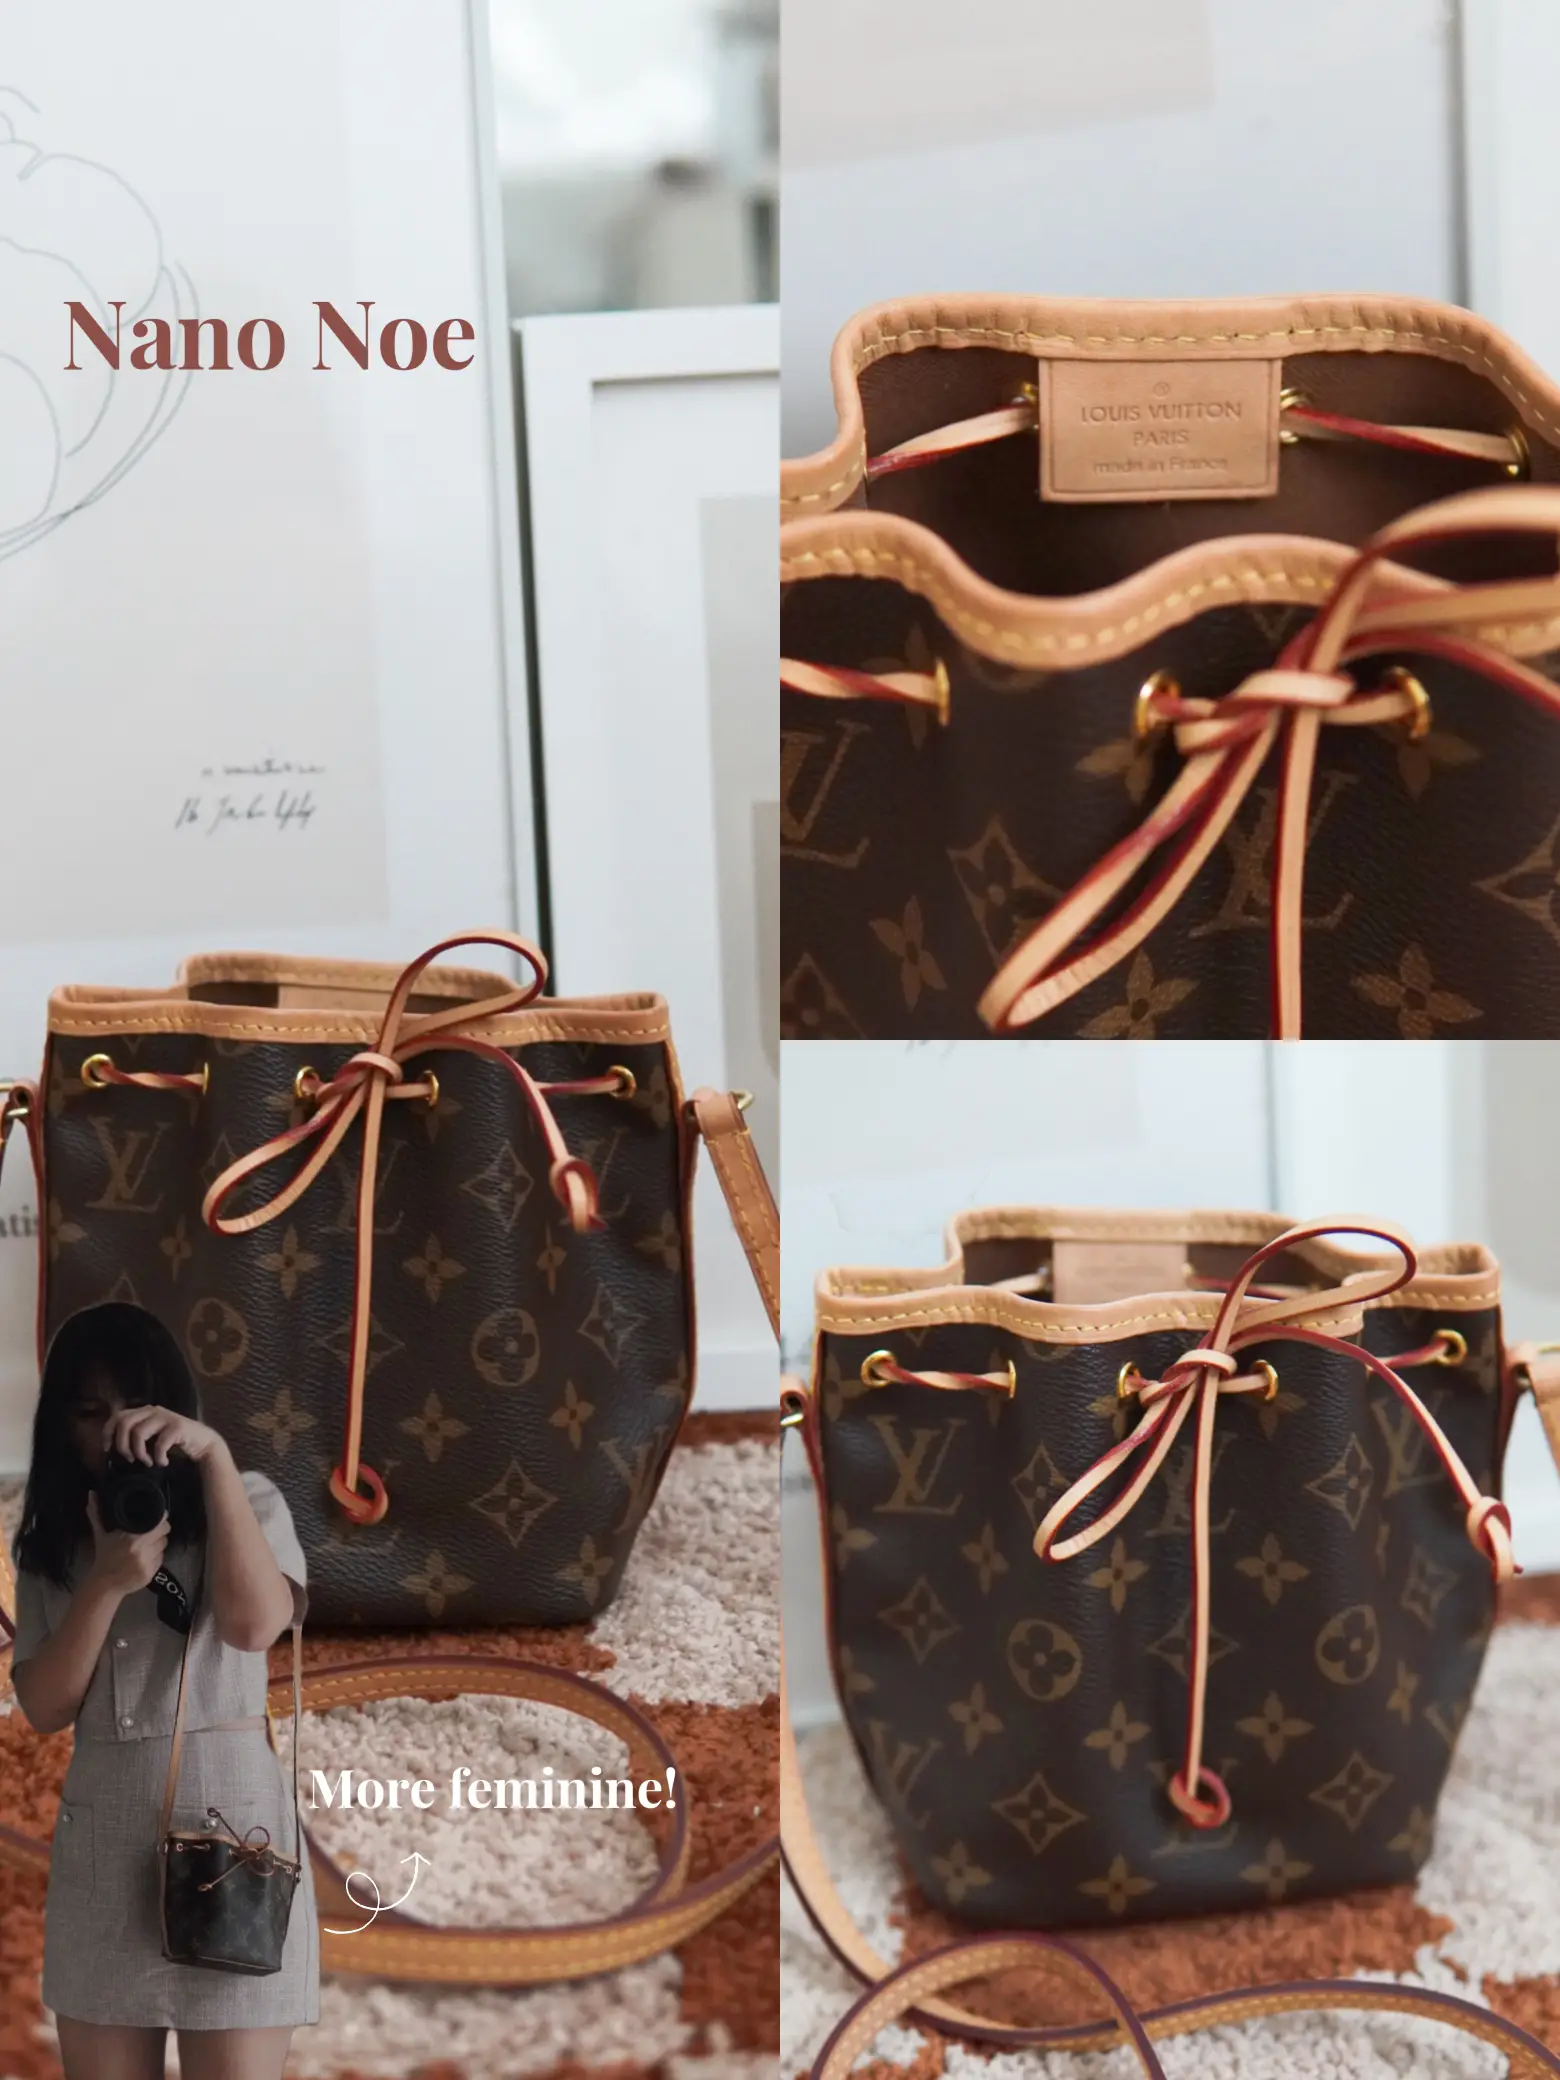 Louis Vuitton Nano Noe Light Beige